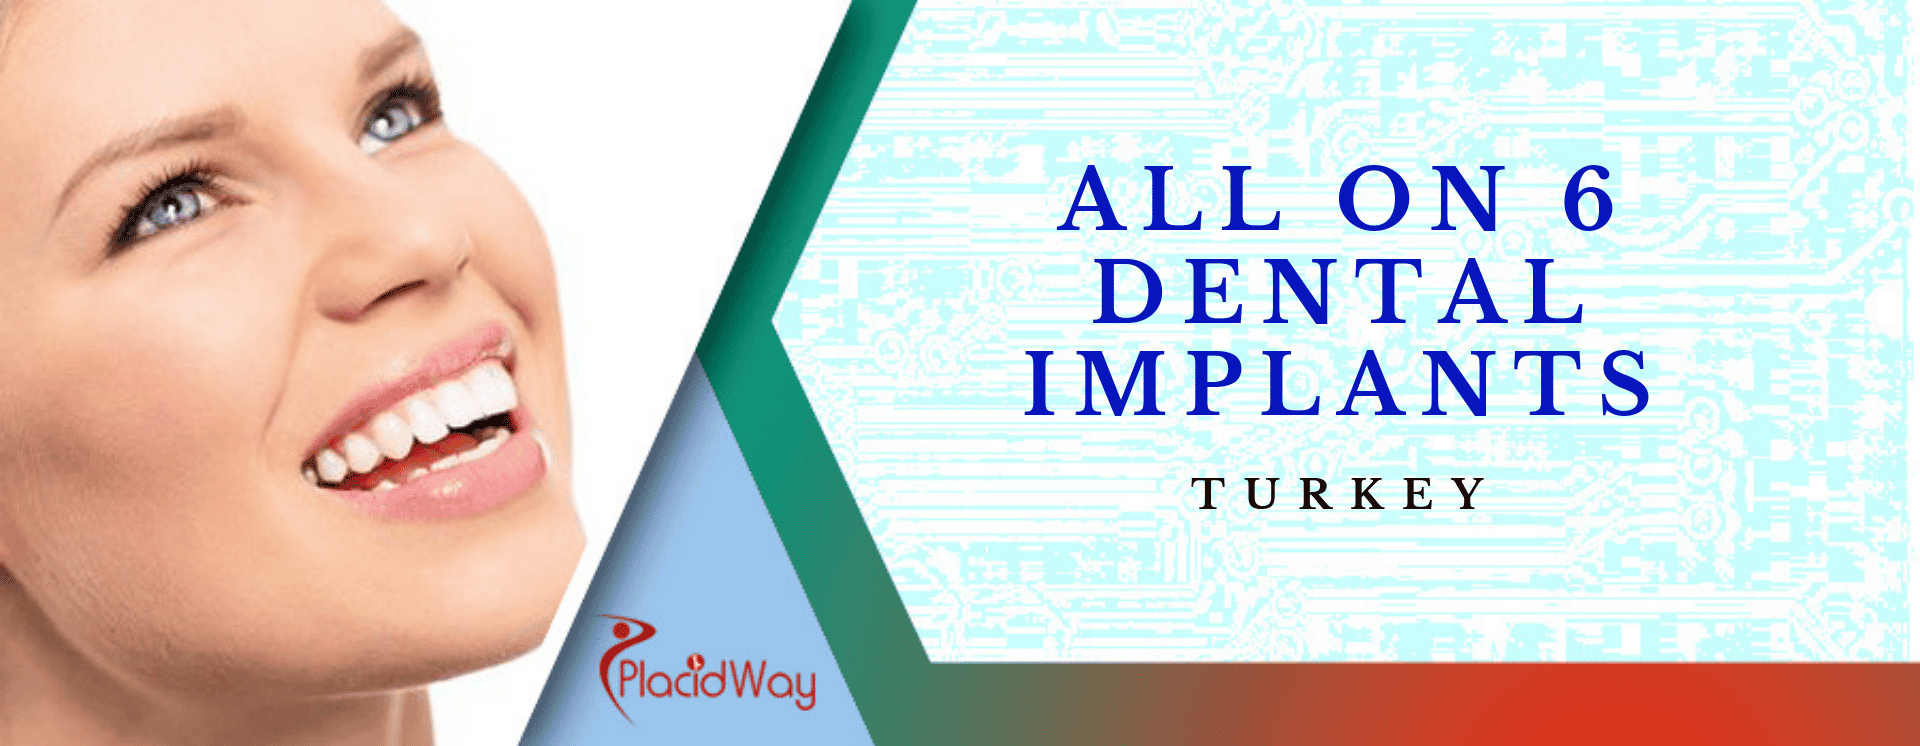 All on 6 Dental Implants in Turkey